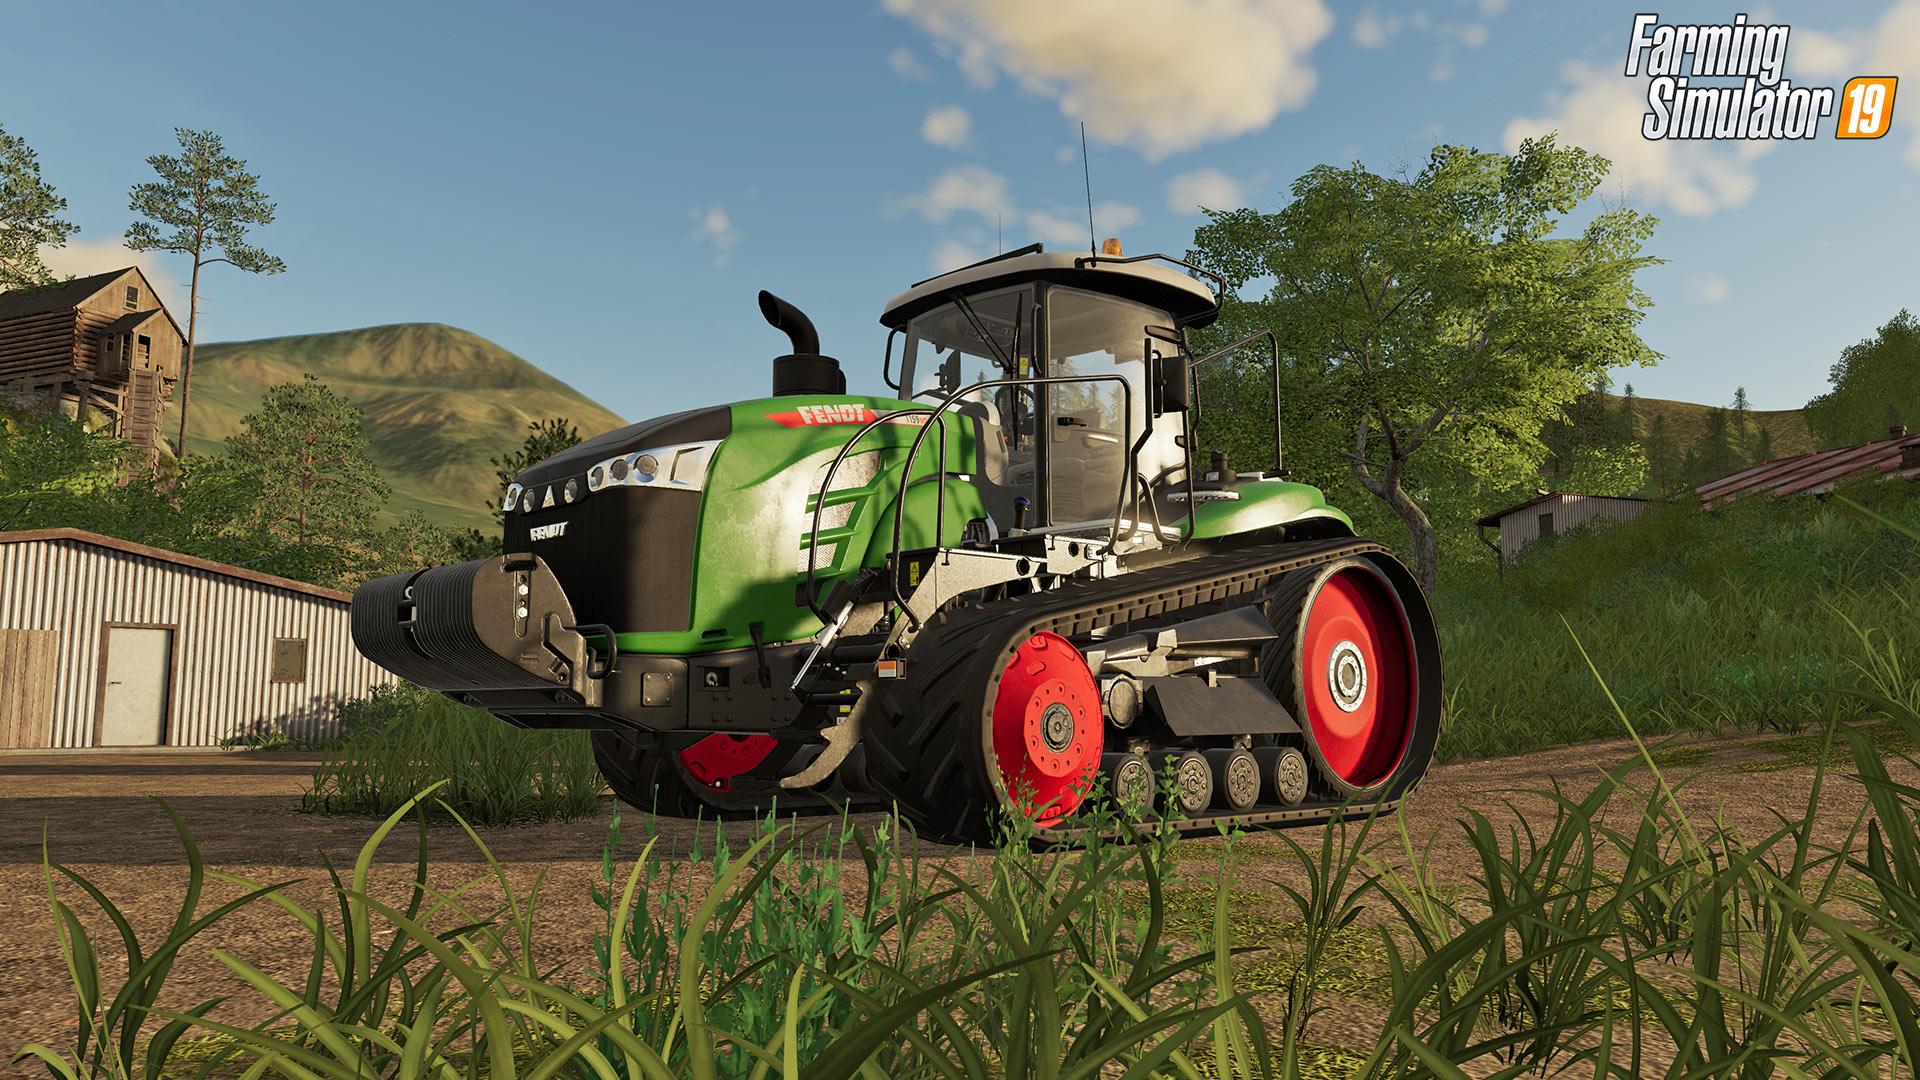 Farming Simulator 19 Is Getting Its Own E Sports League